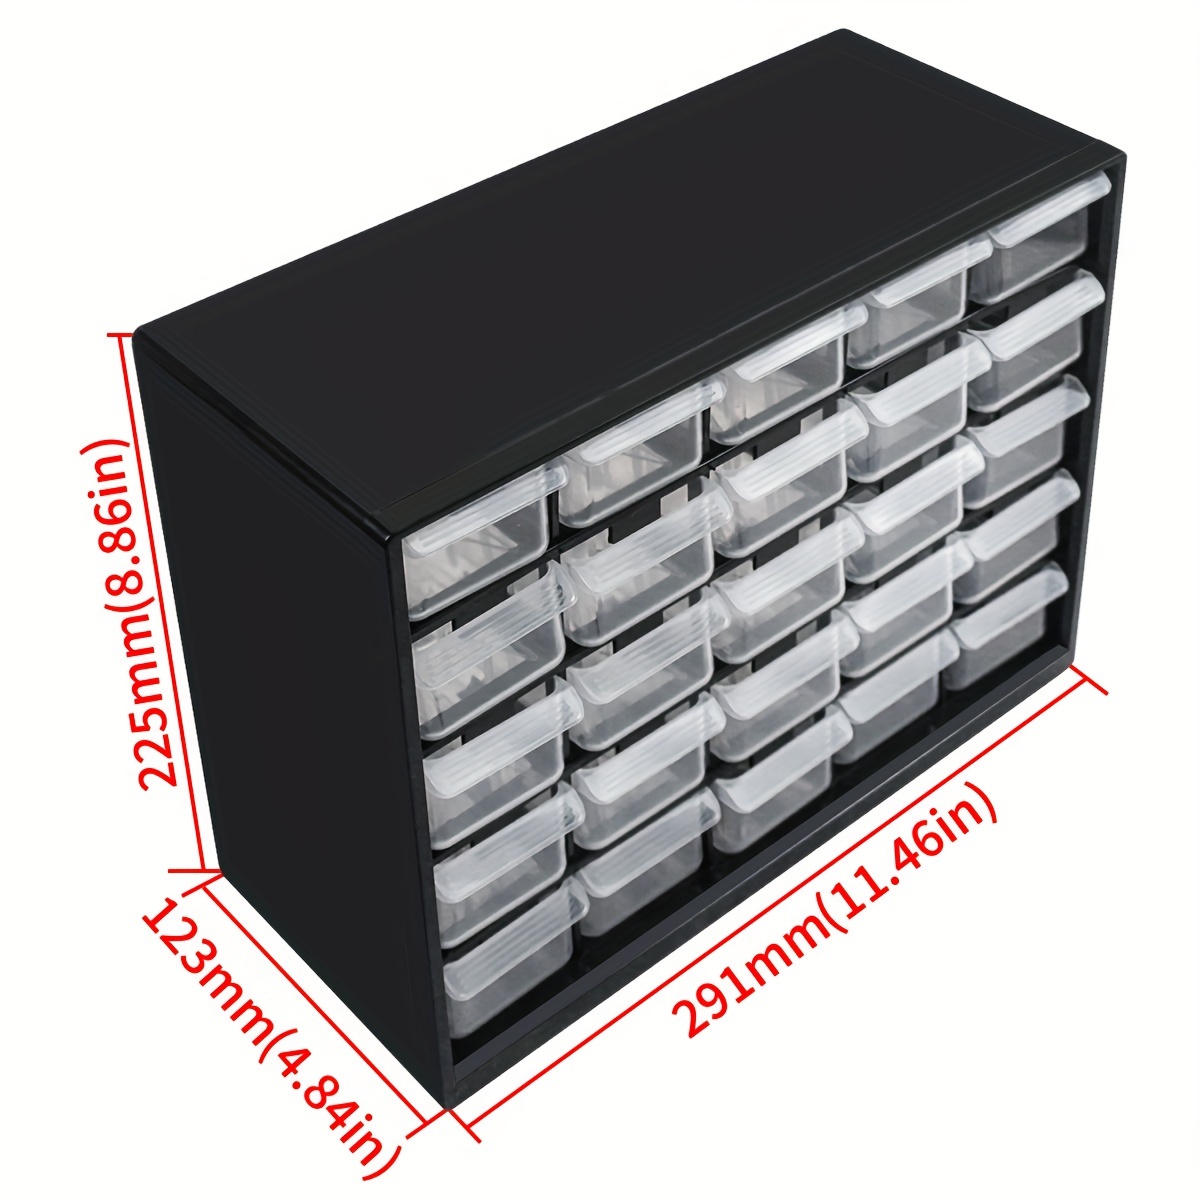 Multi-Compartment Small Parts Storage Box - Wall Mountable